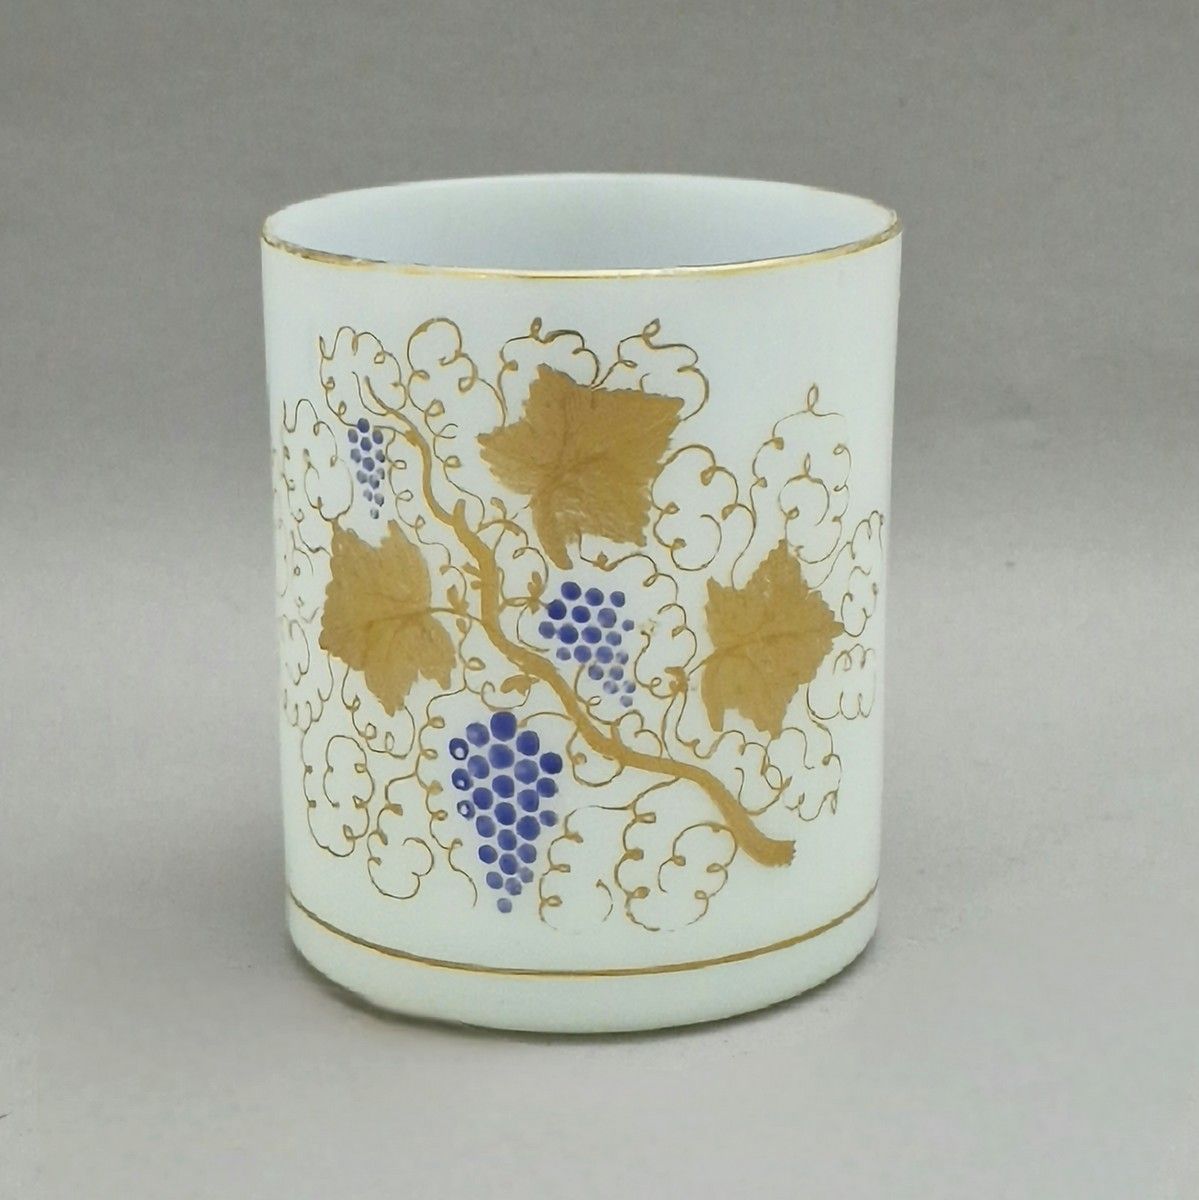 Null 复兴时期的肥皂状乳白色高脚杯，有蓝色和金色的藤芽装饰 
H.9厘米 
TBE (黄金有轻微磨损)